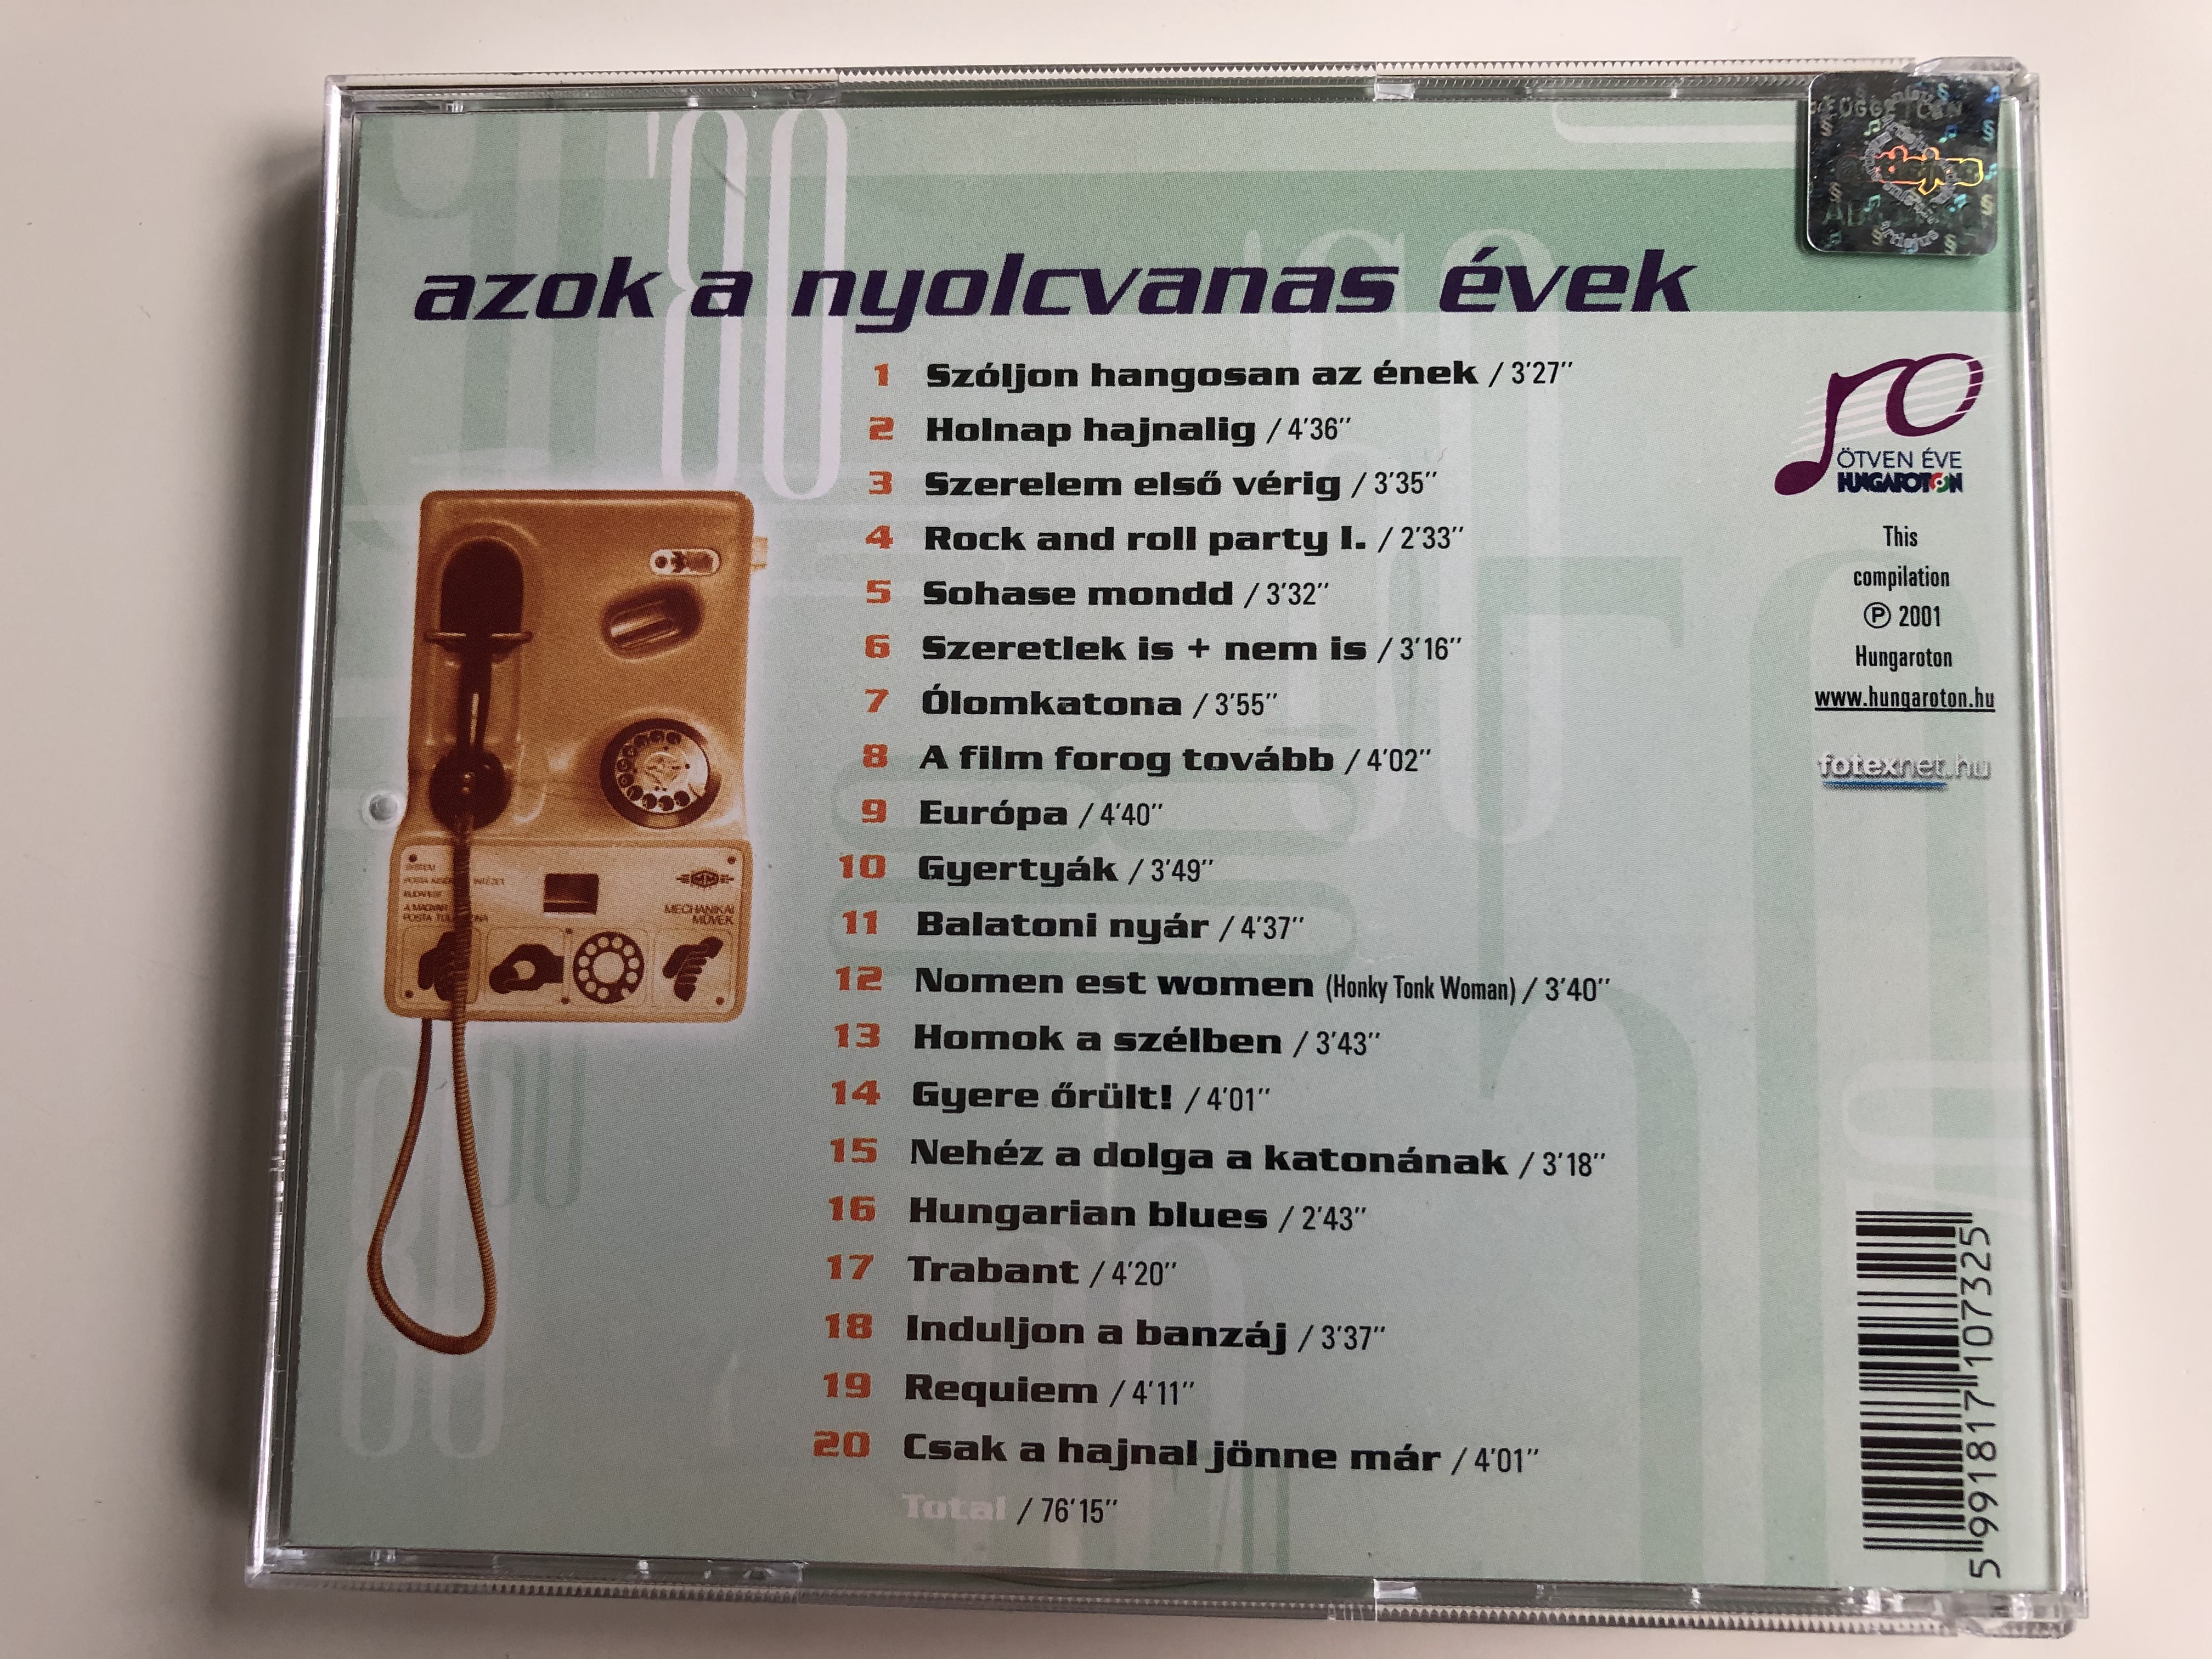 azok-a-nyolcvanas-vek-hungaroton-audio-cd-2001-hcd-71073-6-.jpg